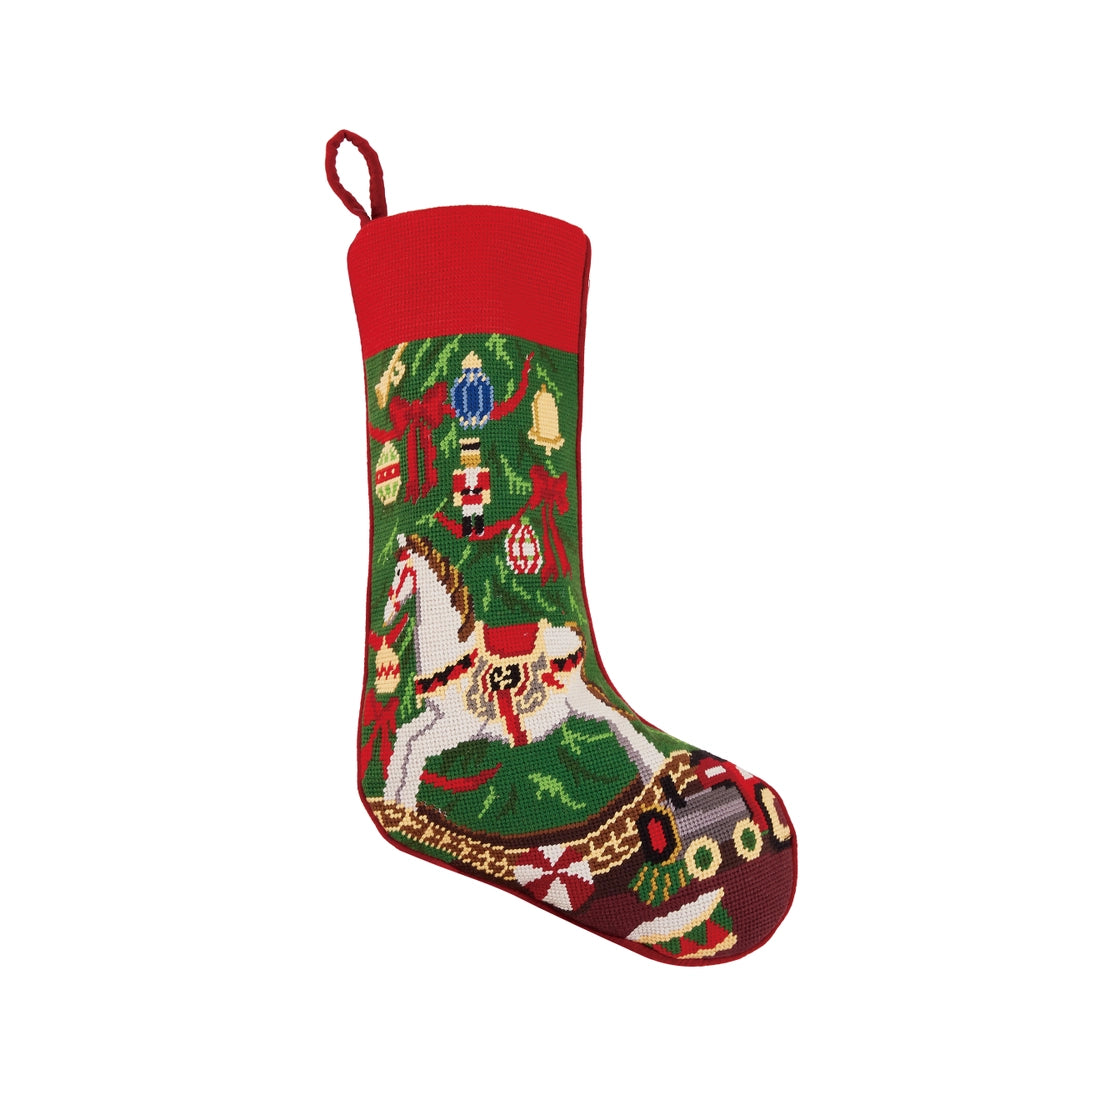 Needlepoint Christmas Stockings (Various Designs)